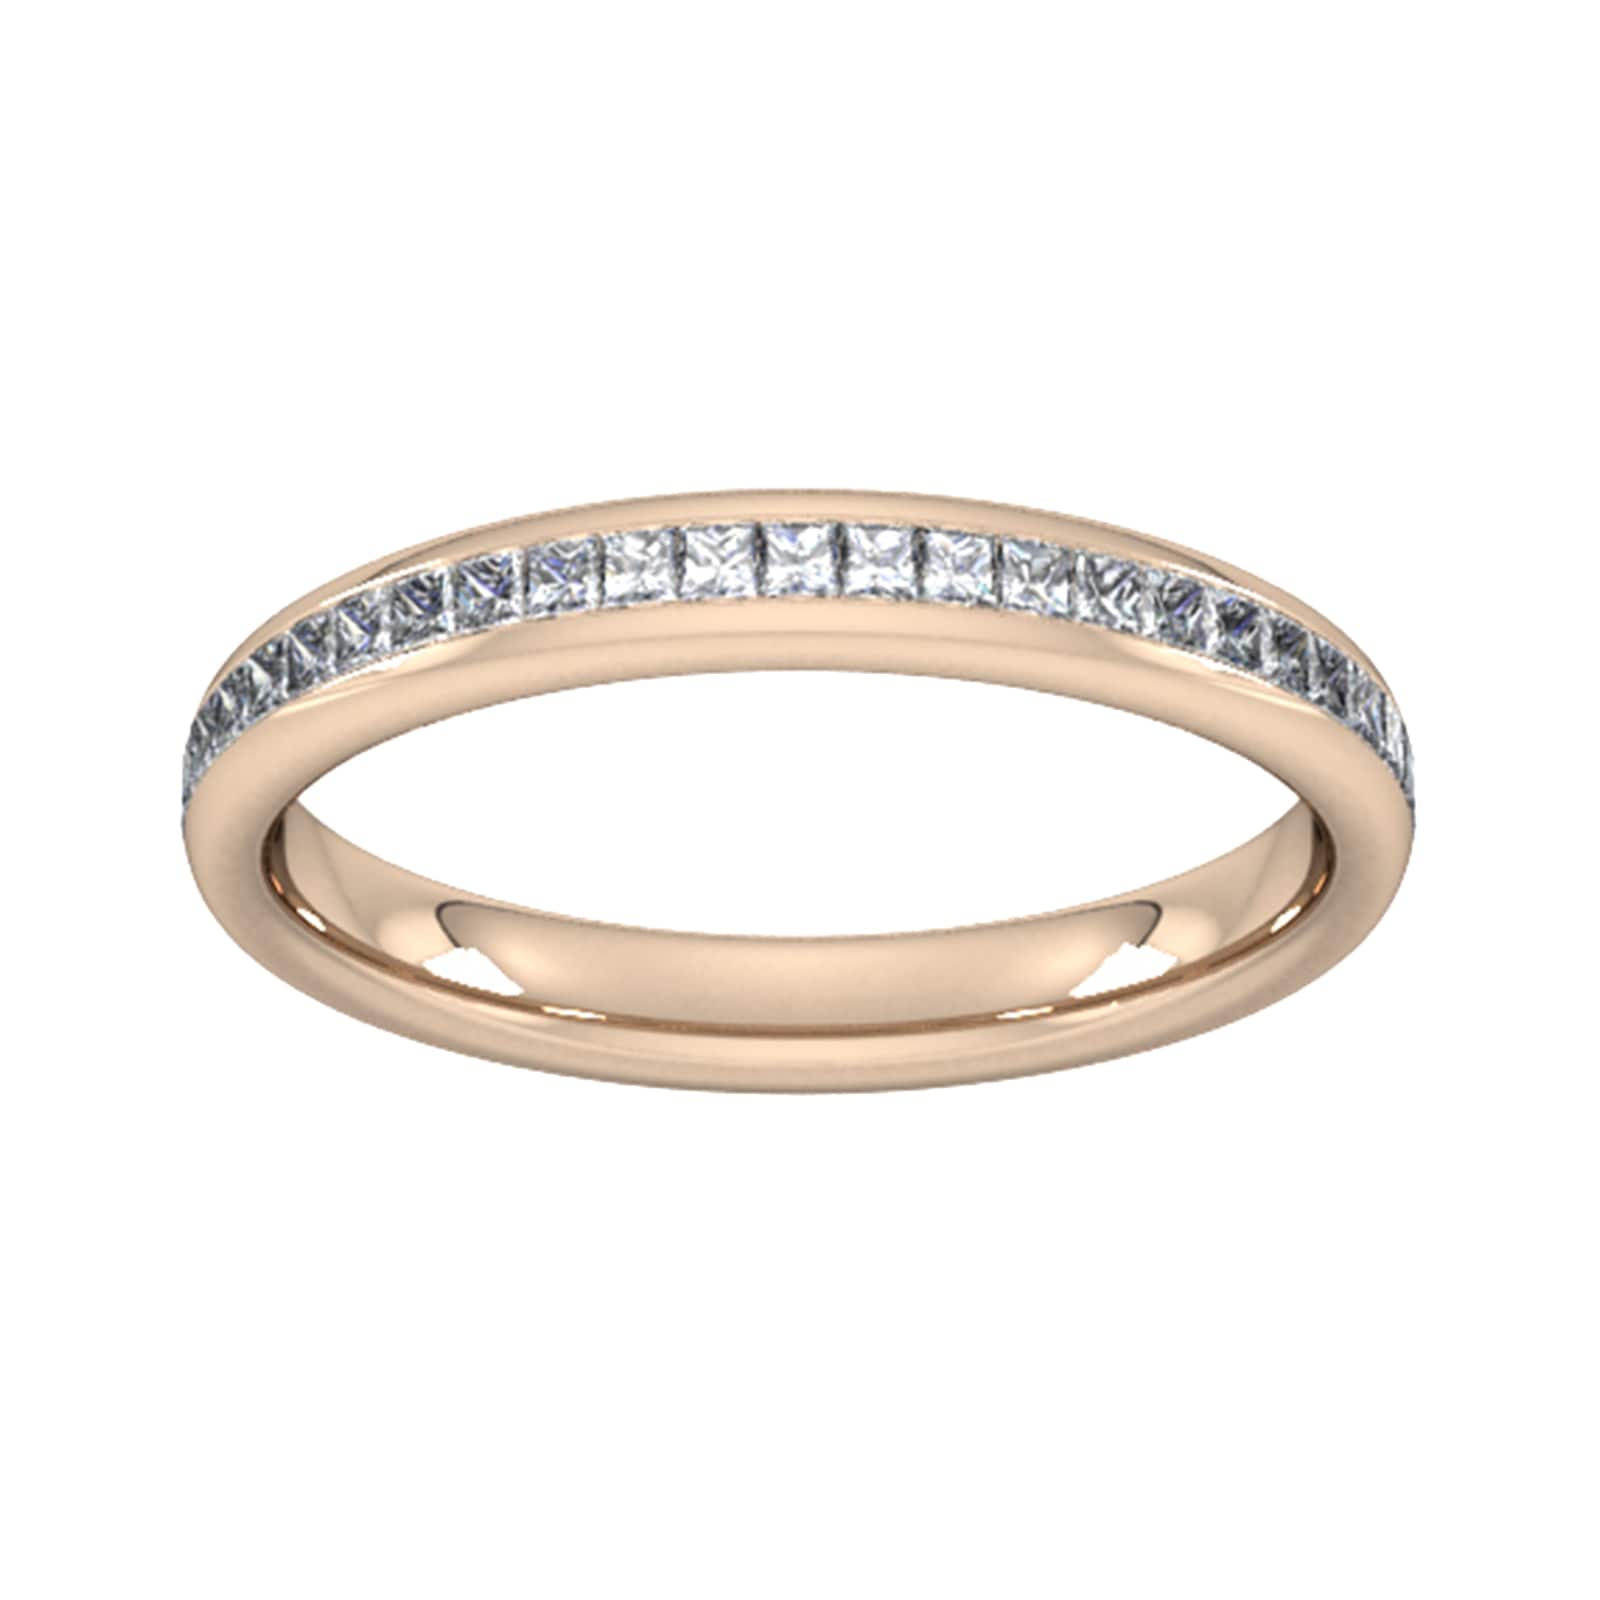 0.34 Carat Total Weight Princess Cut Channel Set Wedding Ring In 18 Carat Rose Gold - Ring Size K